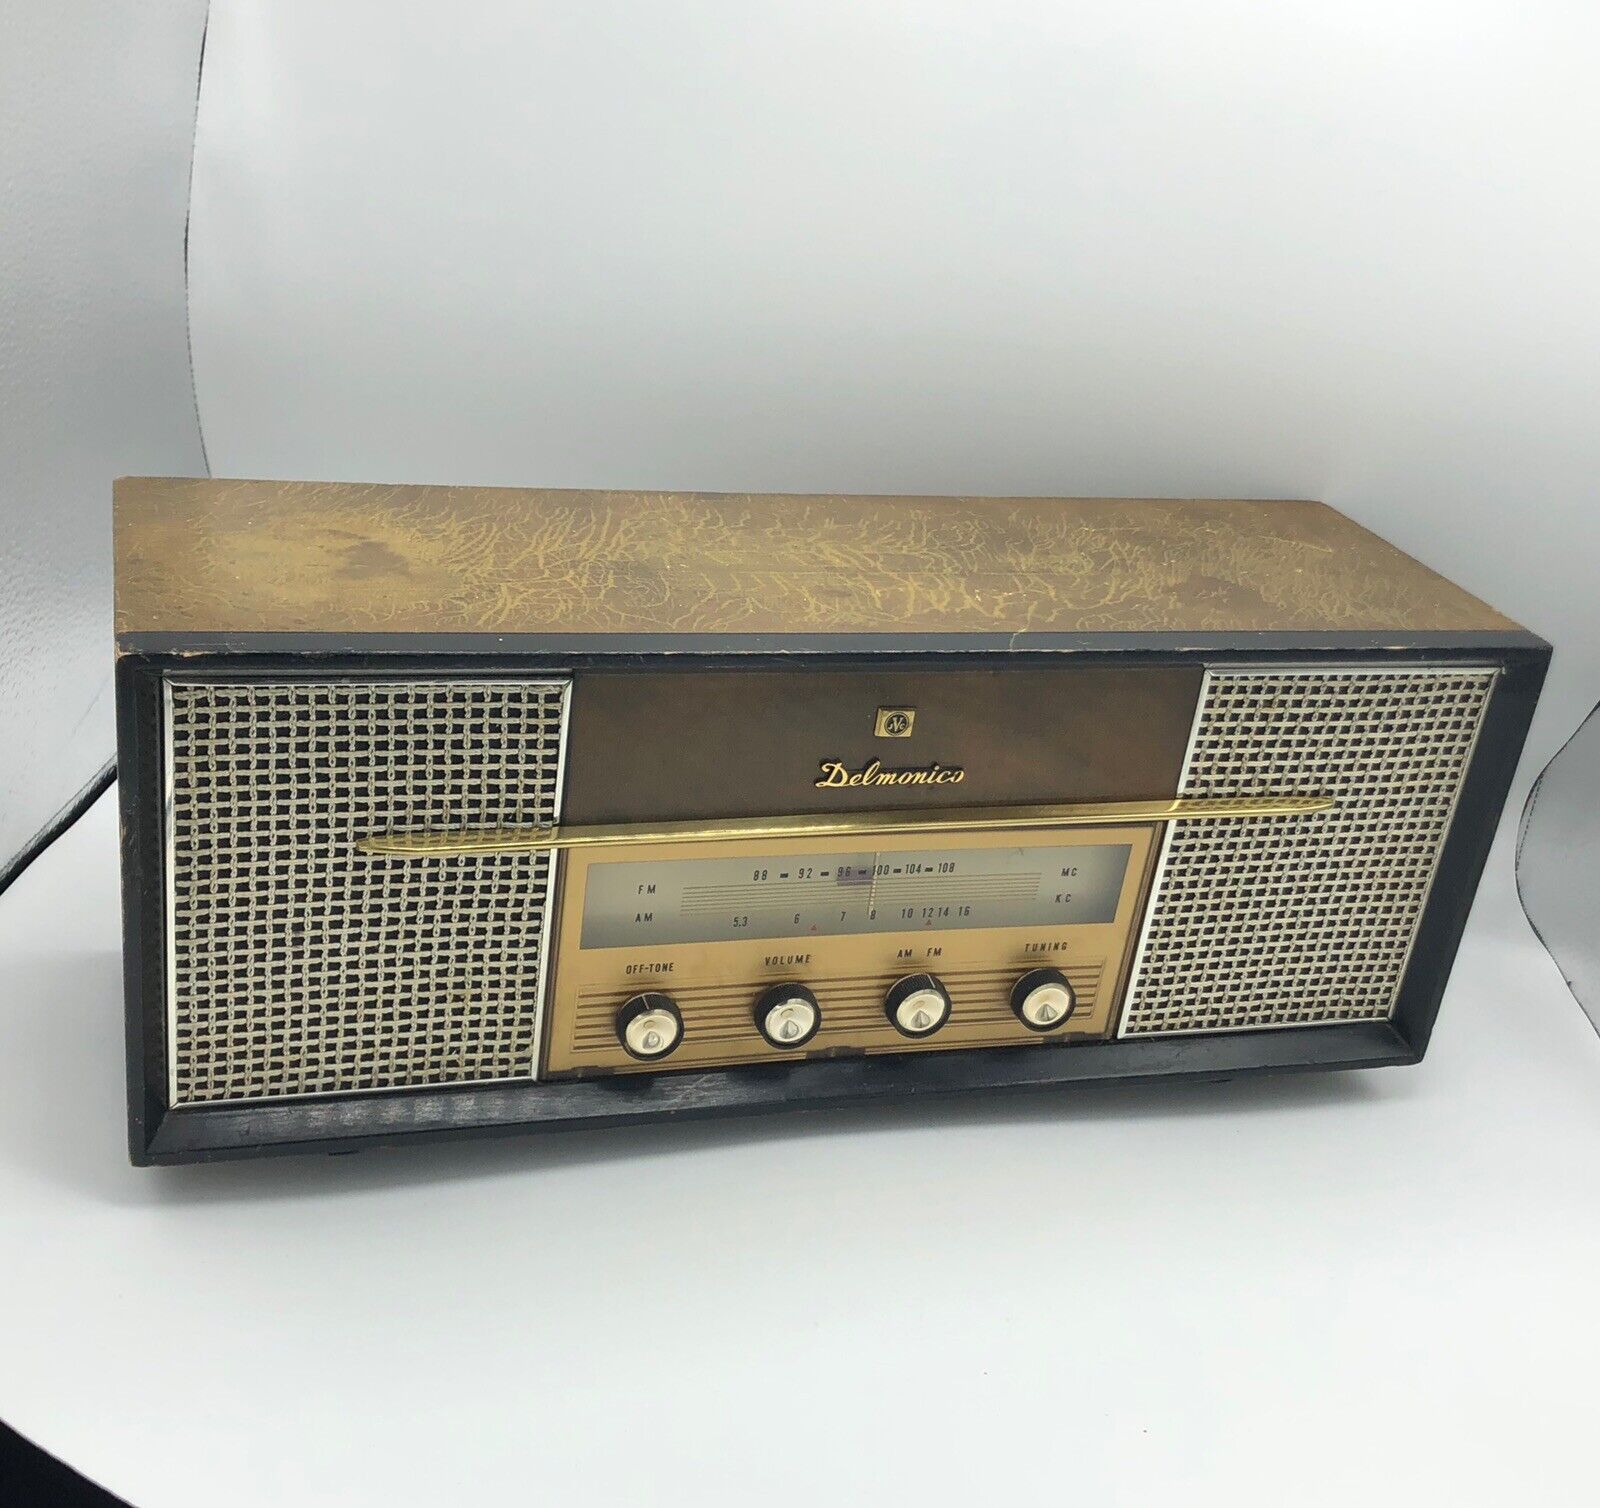 Vintage 1960s JVC Delmonico AM/FM Radio - Model TMF-99U - Tested / Working